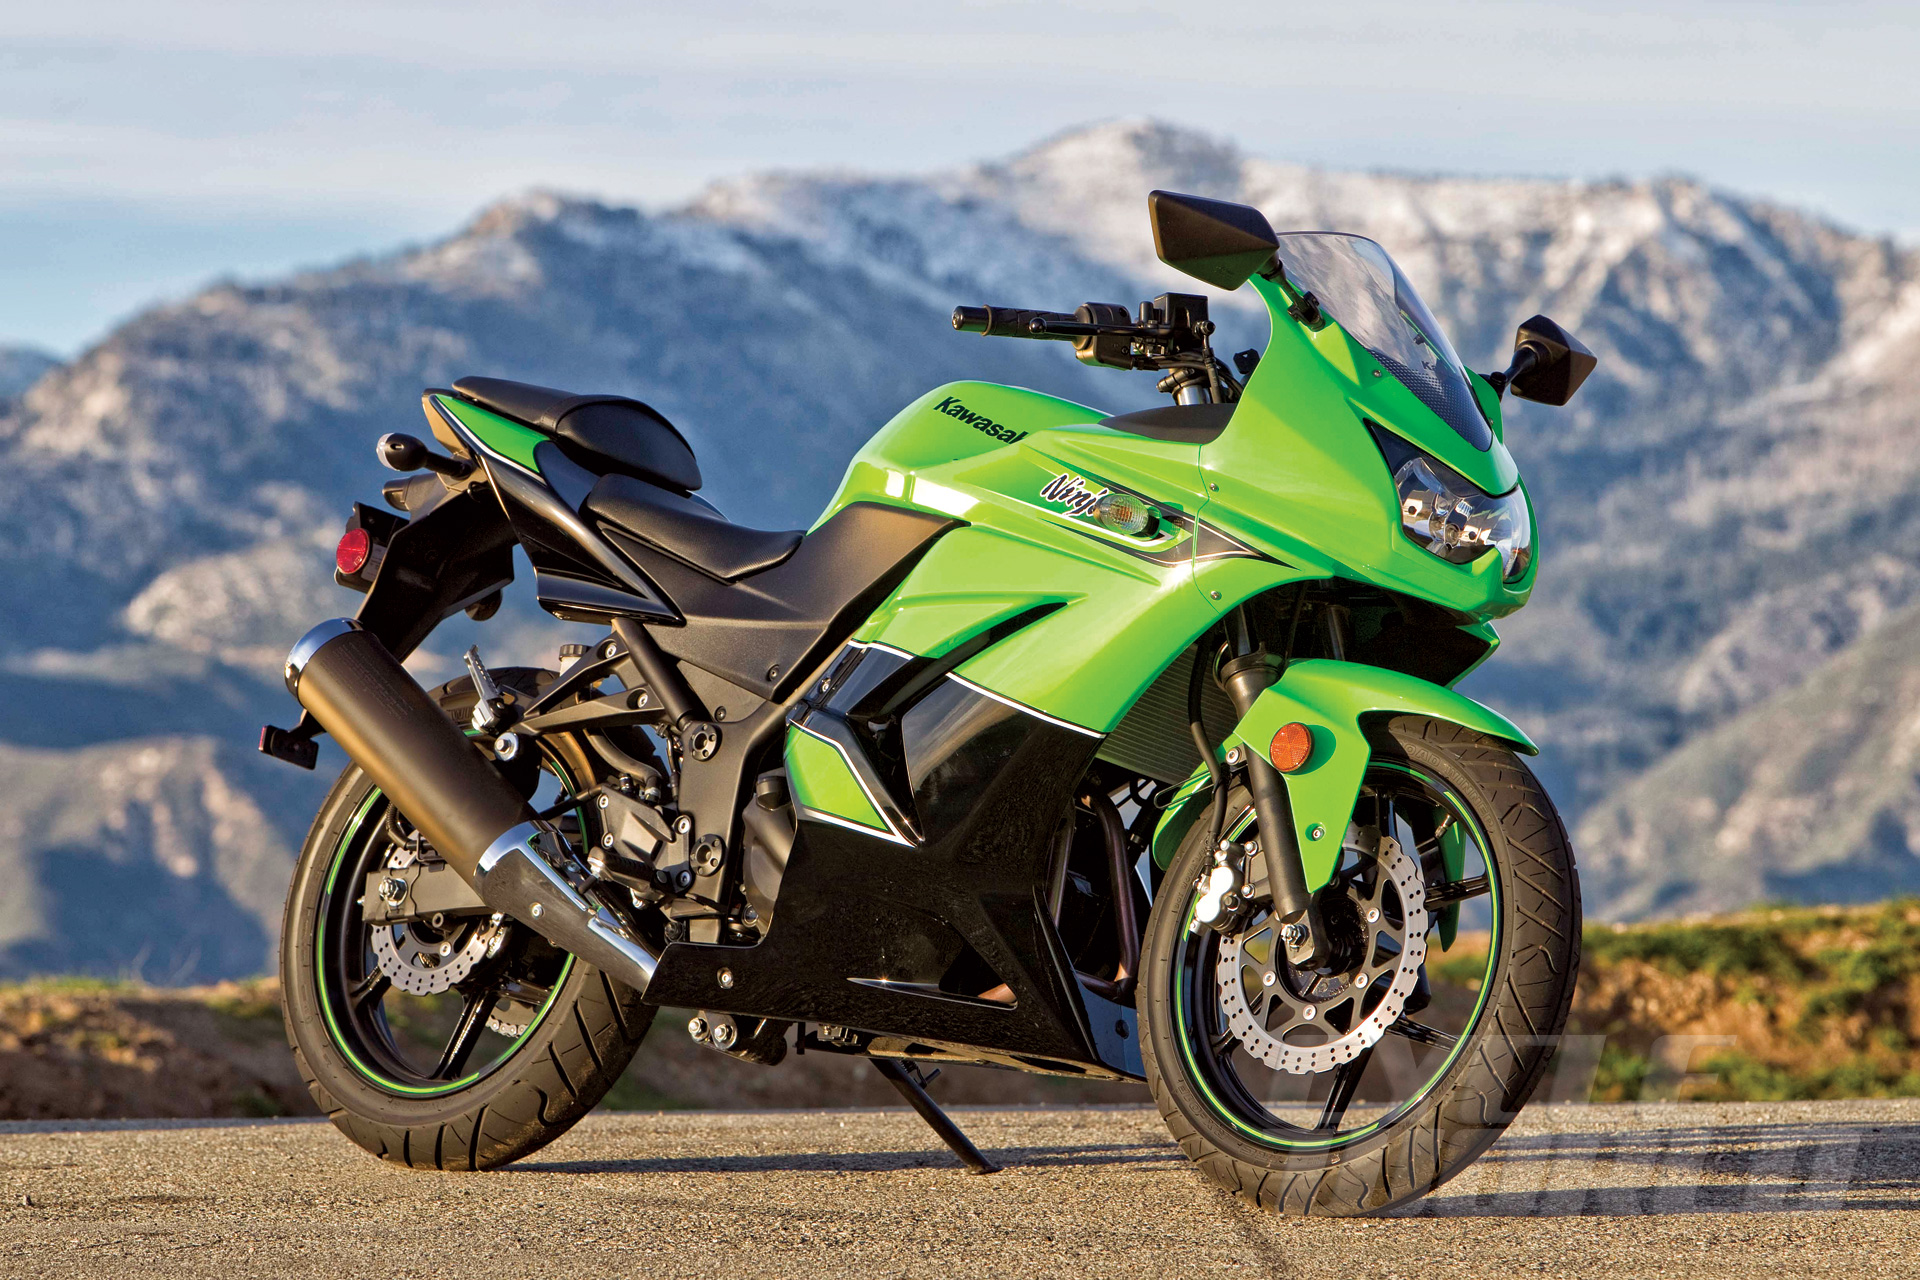 Kawasaki Ninja USED Entry-Level Sportbike Motorcycle Review World